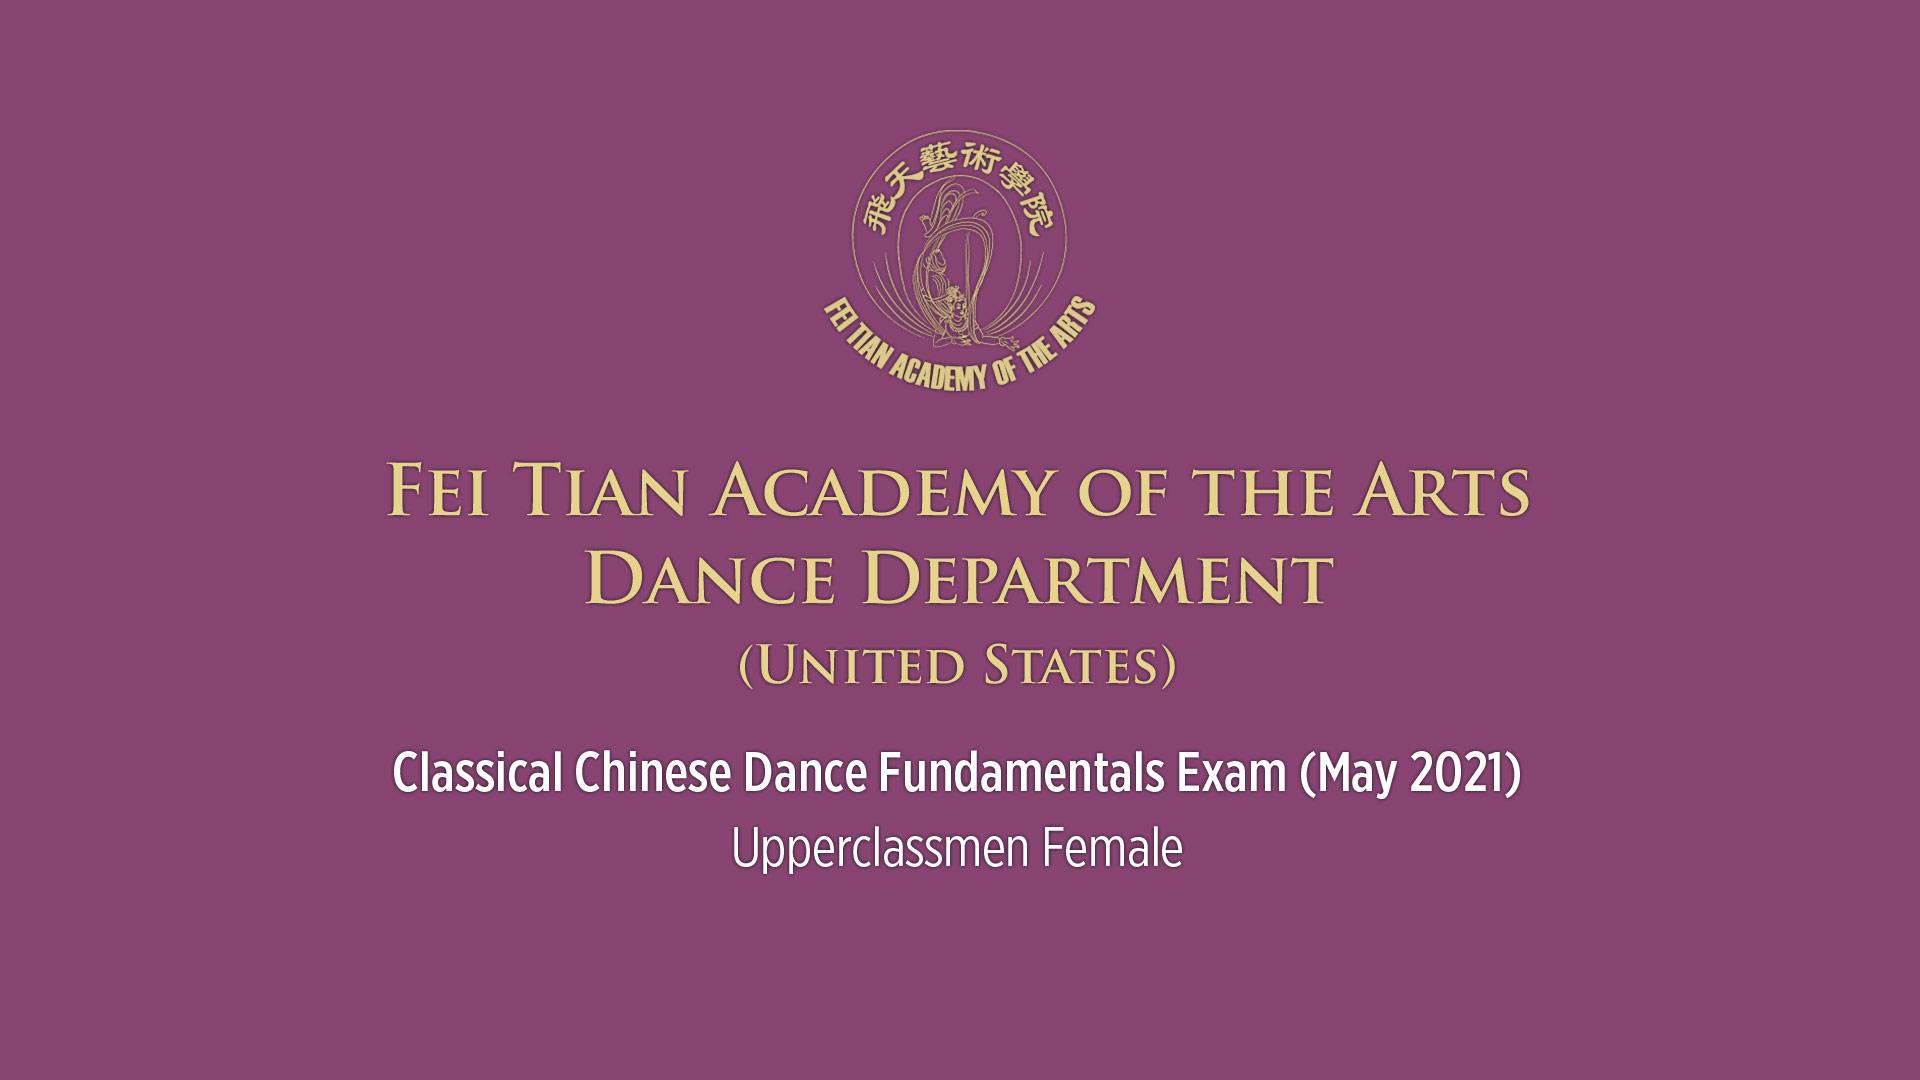 Fei Tian Academy of the Arts Dance Department Classical Chinese Dance Fundamentals Exam - Upperclassmen Female